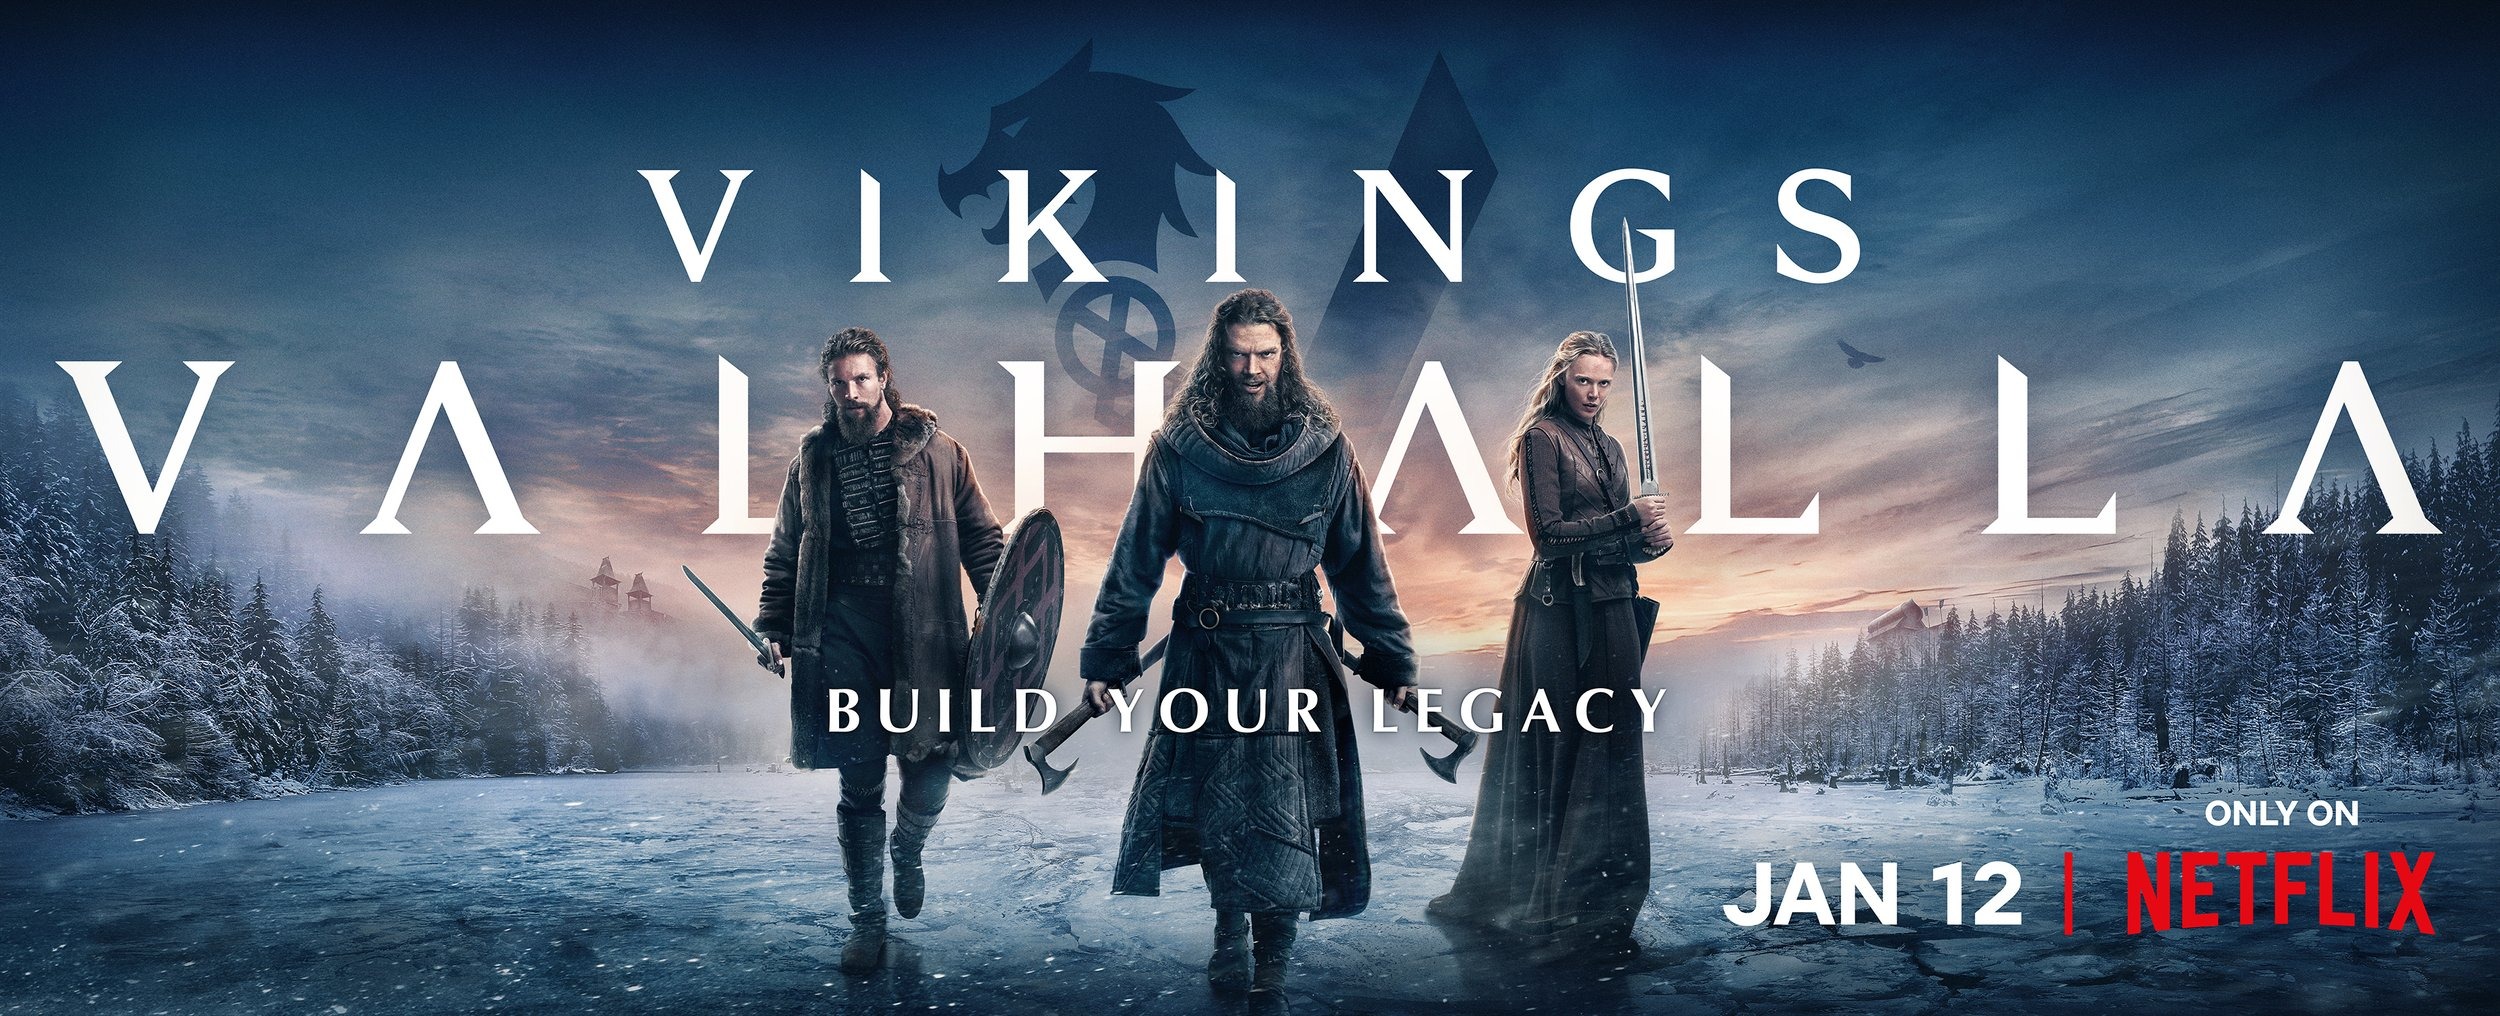 Mega Sized TV Poster Image for Vikings: Valhalla (#11 of 18)